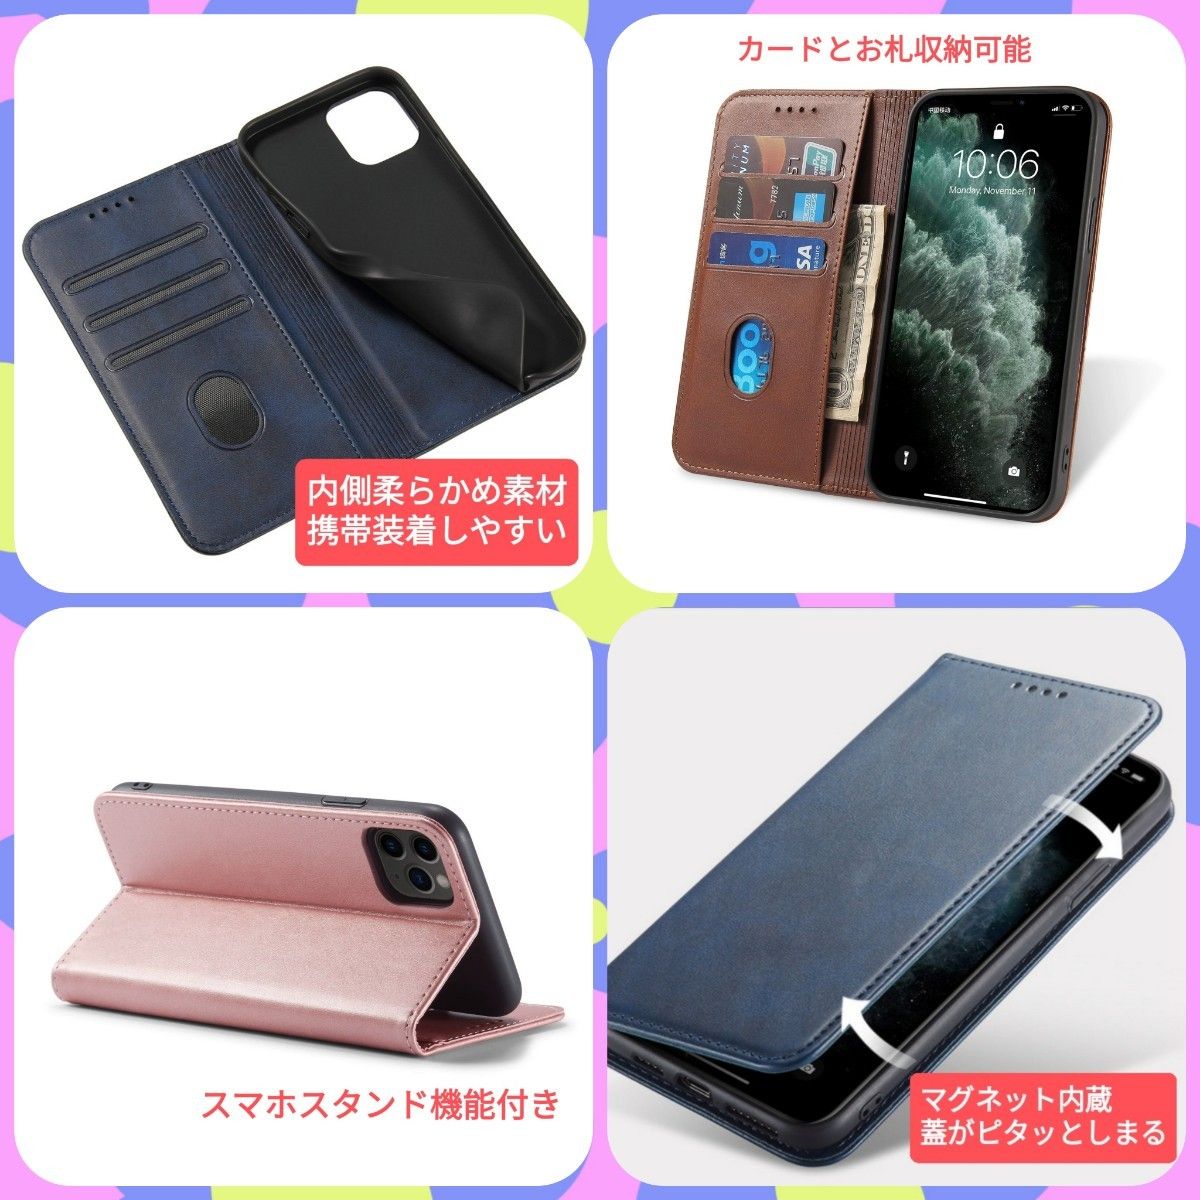 iPhone１５plus手帳型スマホケース新品アイフォン１５プラスレザー携帯カバー　お札カード収納　スマホスタンド多機能携帯ケース